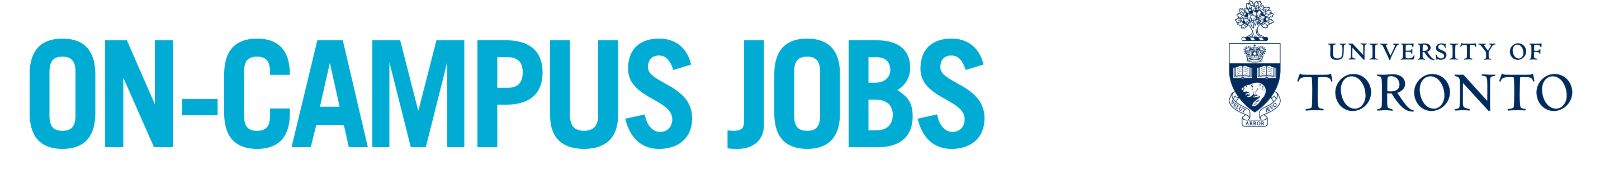 On-Campus Jobs logo